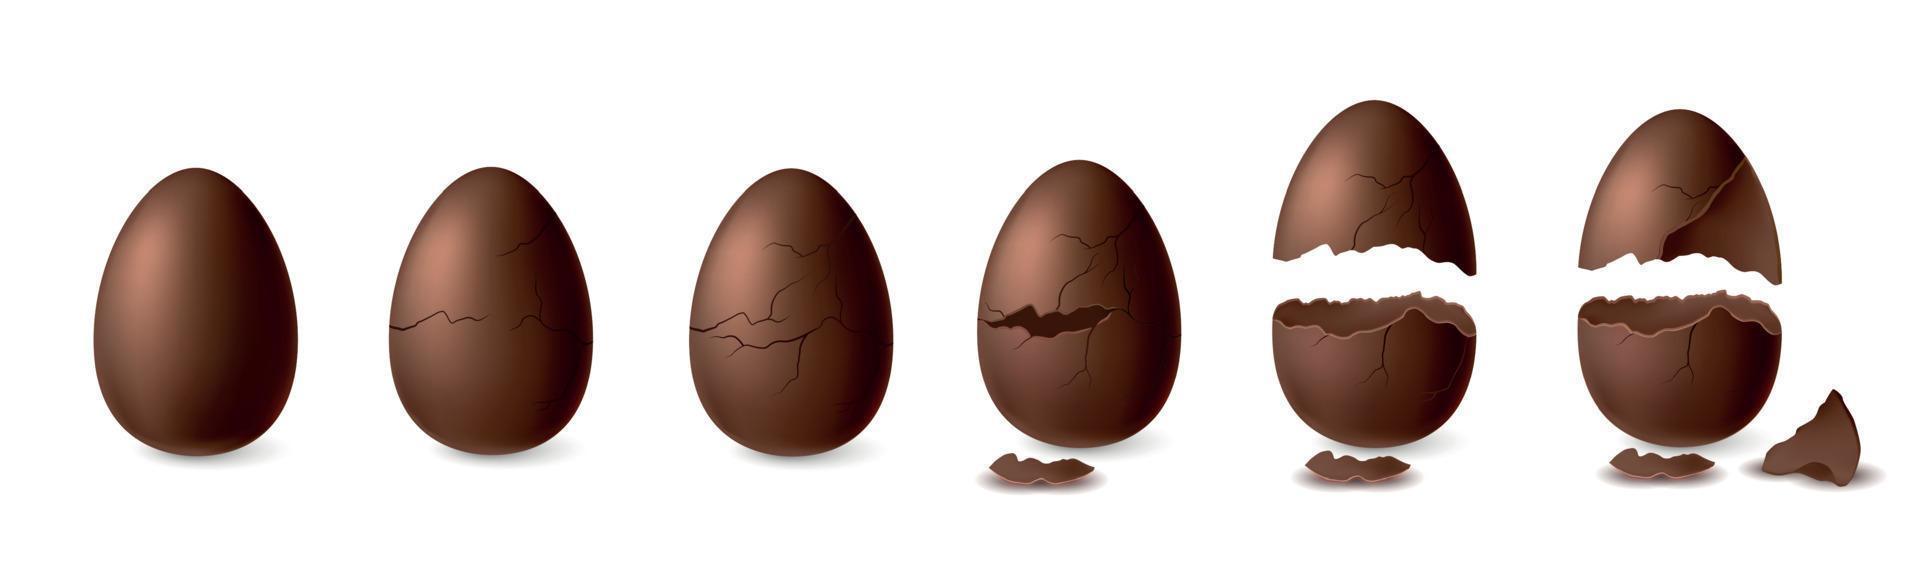 chocolade eierset vector